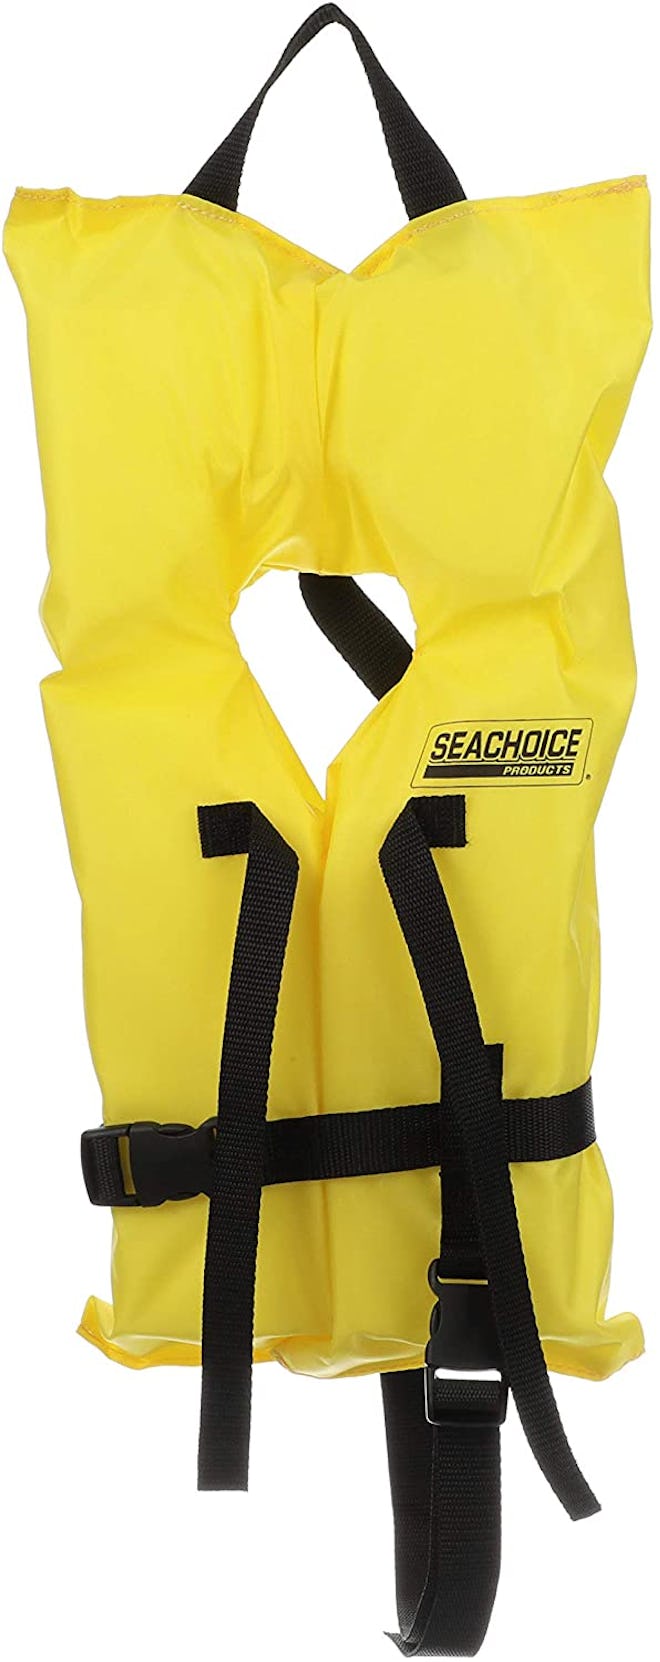 Seachoice Life Vest Type II Personal Flotation Device 